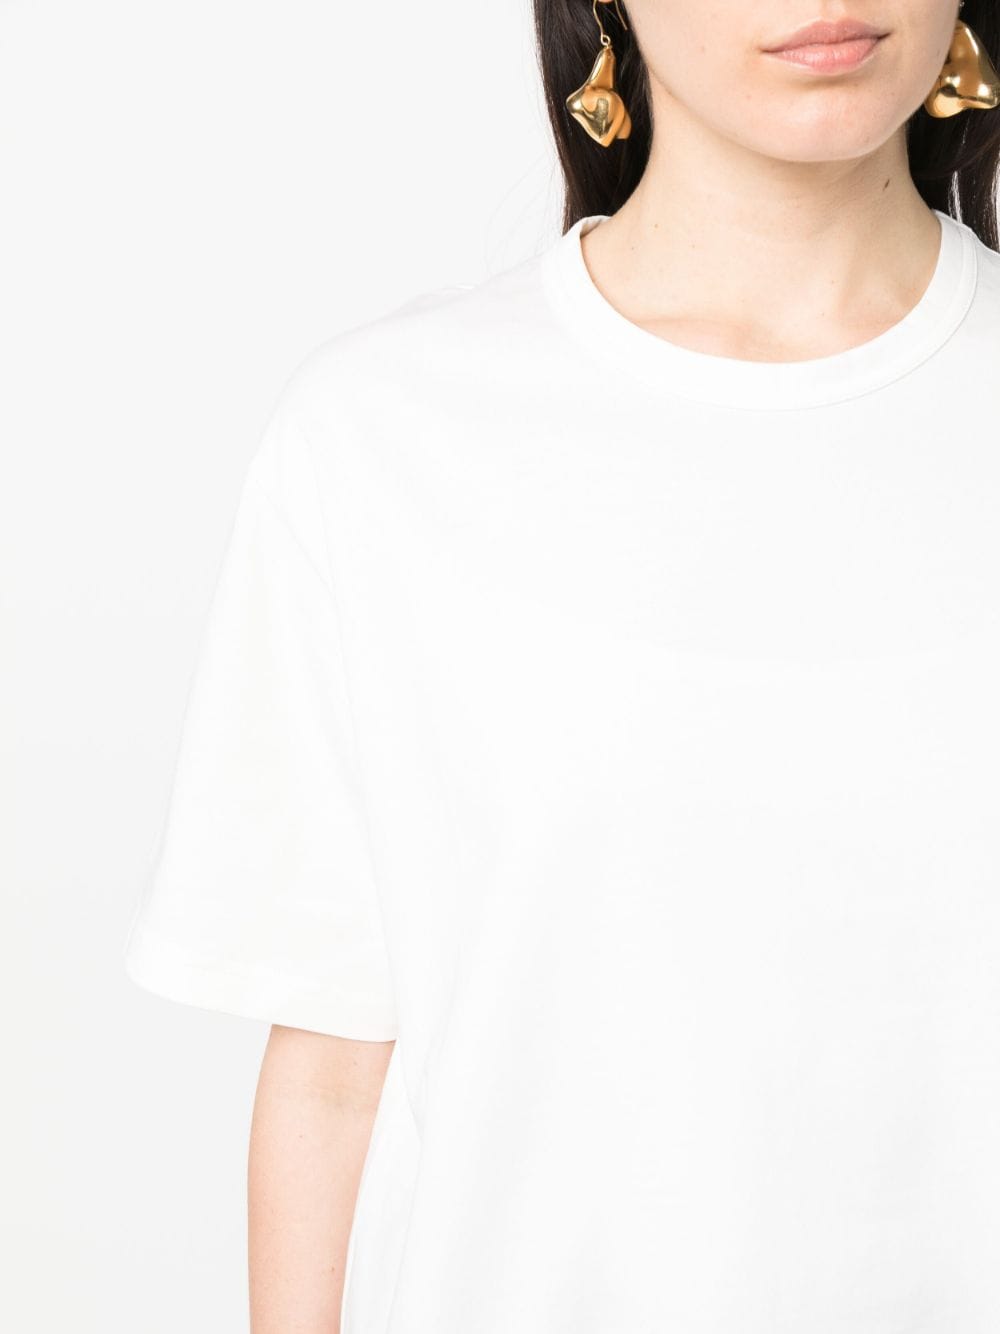 Studio Nicholson T Shirts And Polos White